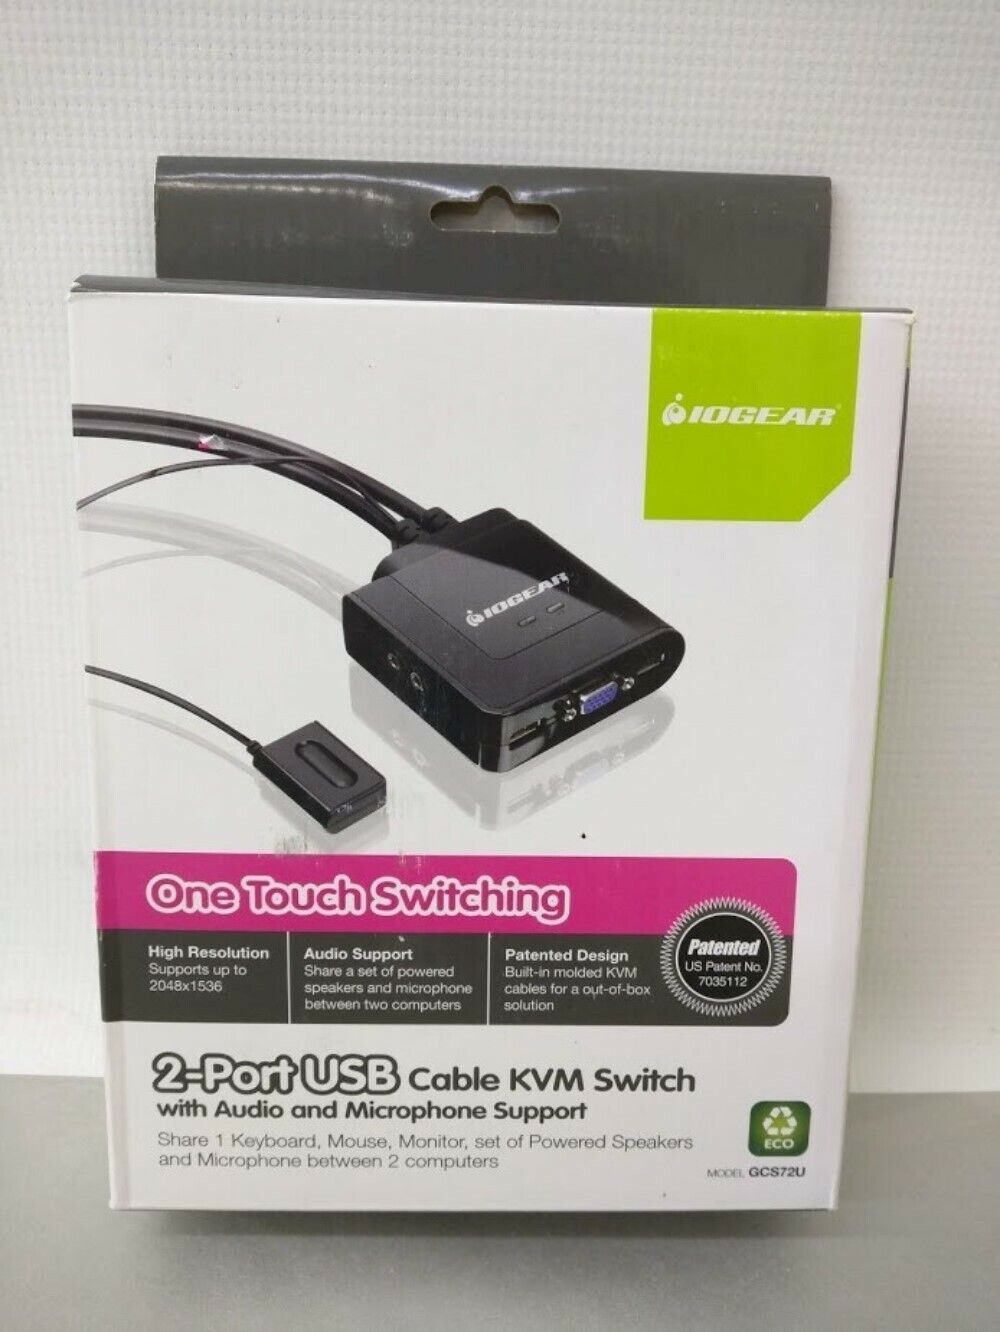 IOGEAR GCS72U -2 Port USB Cable KVM Switch w/ Audio & Microphone Support 